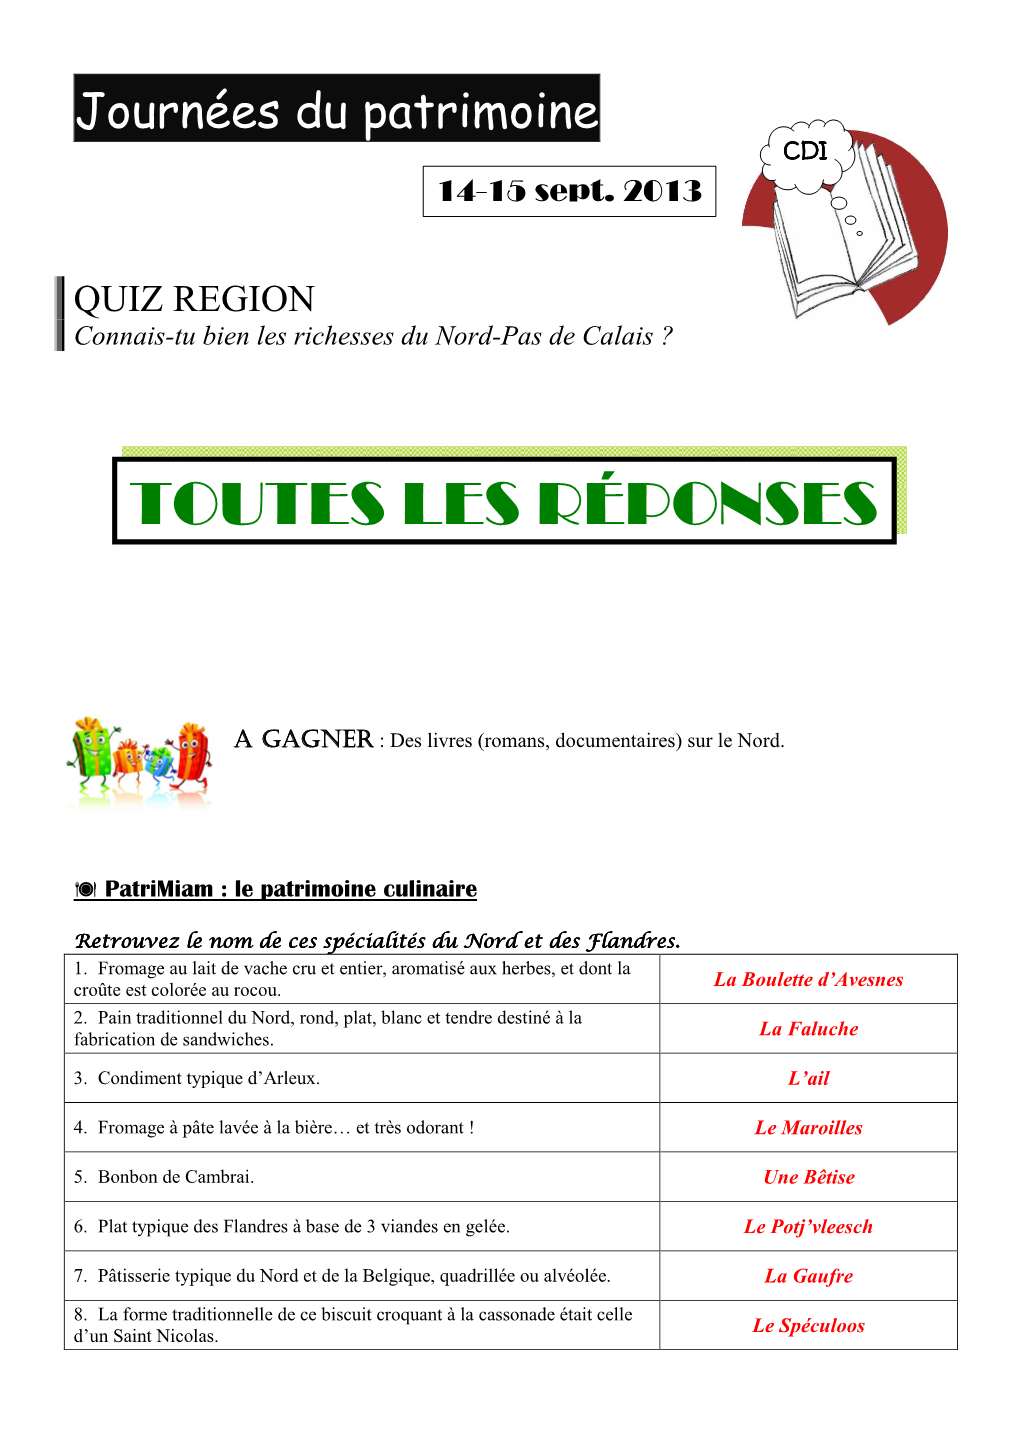 Questionnaire 2013-REPONSES